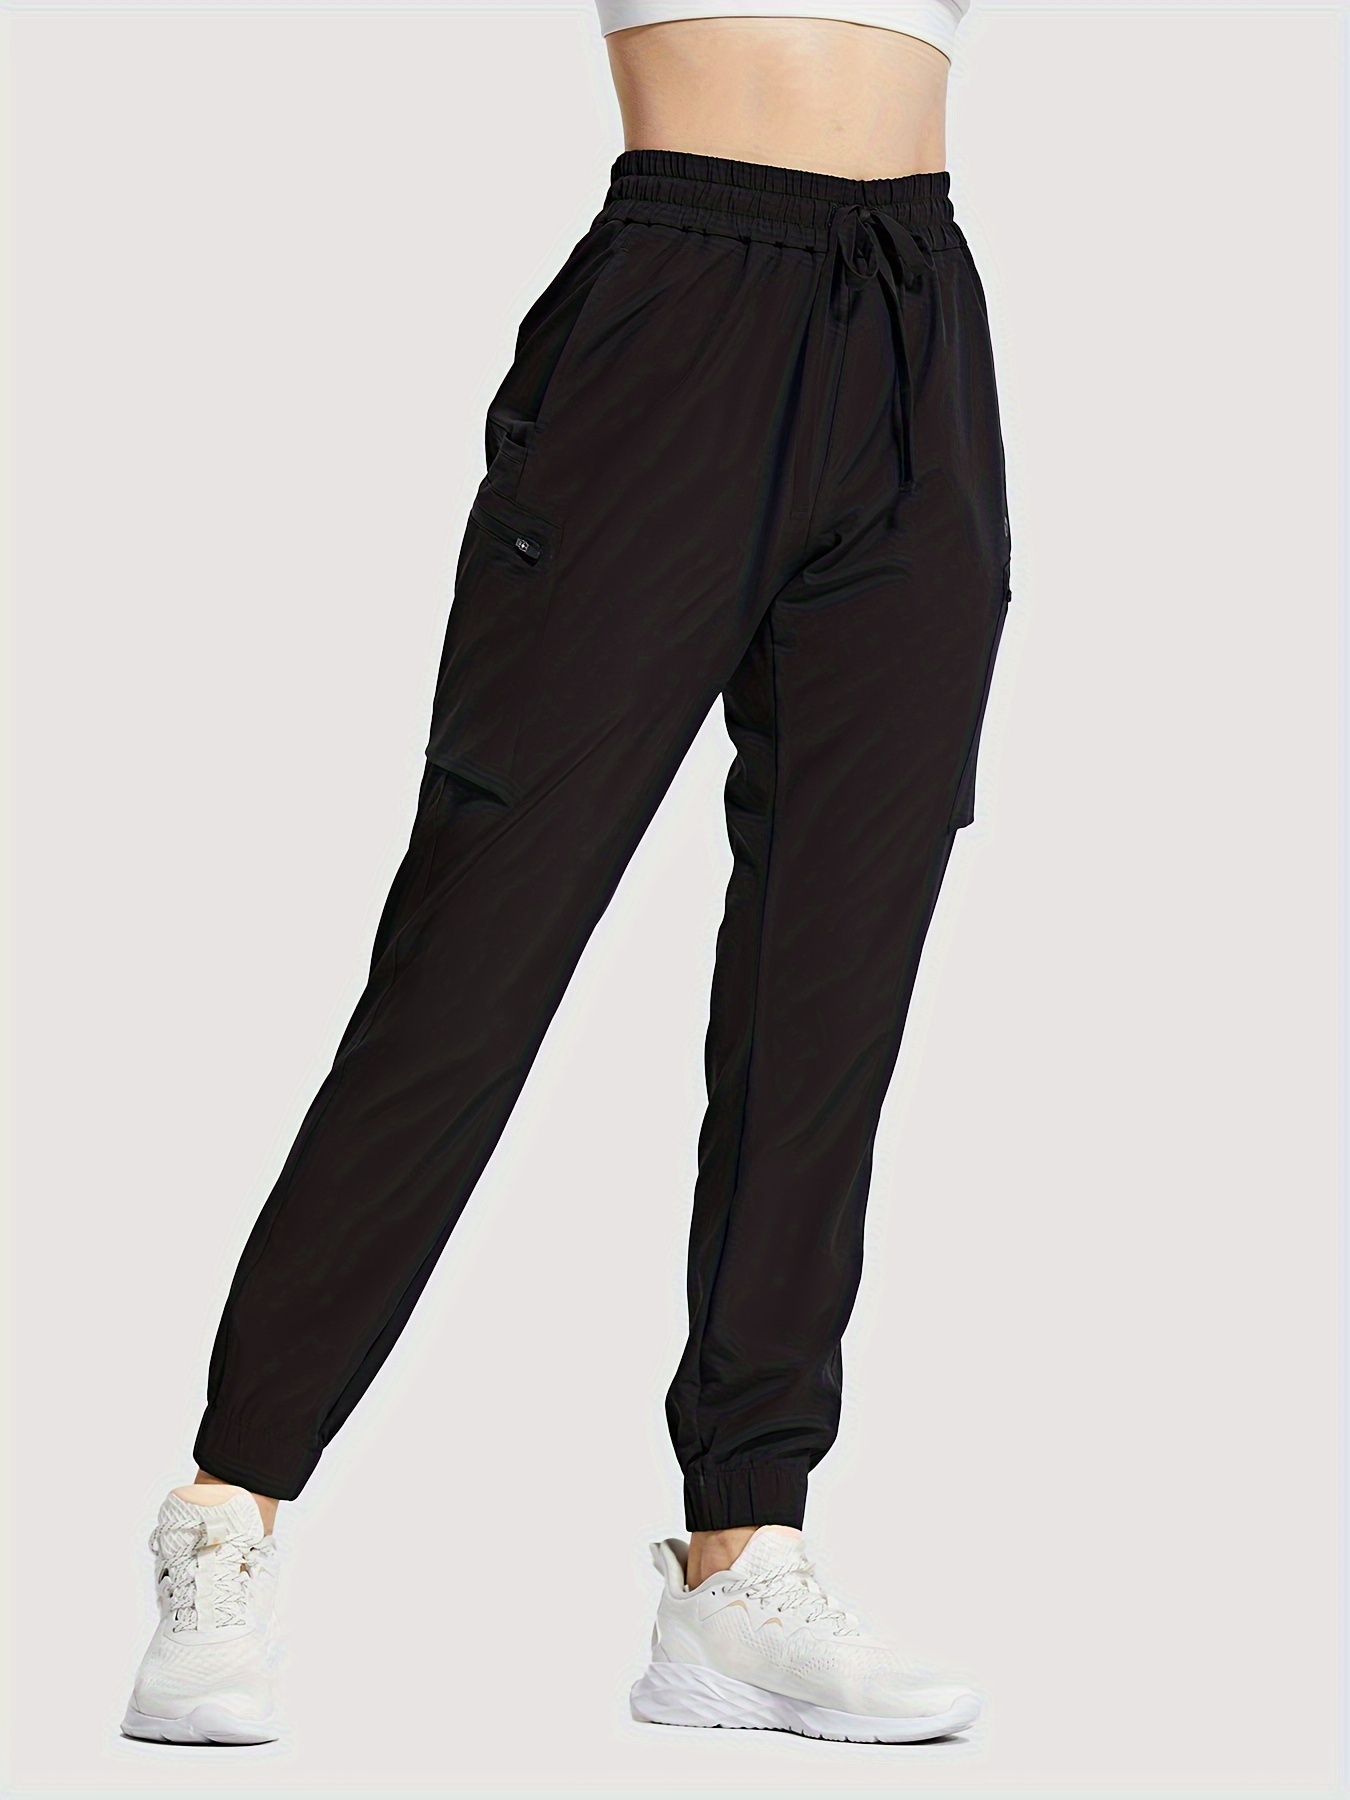 Womens Hiking Pants Quick Dry UPF 50 Travel Golf Pants Lightweight Camping  Work Cargo Pants Zipper Pockets